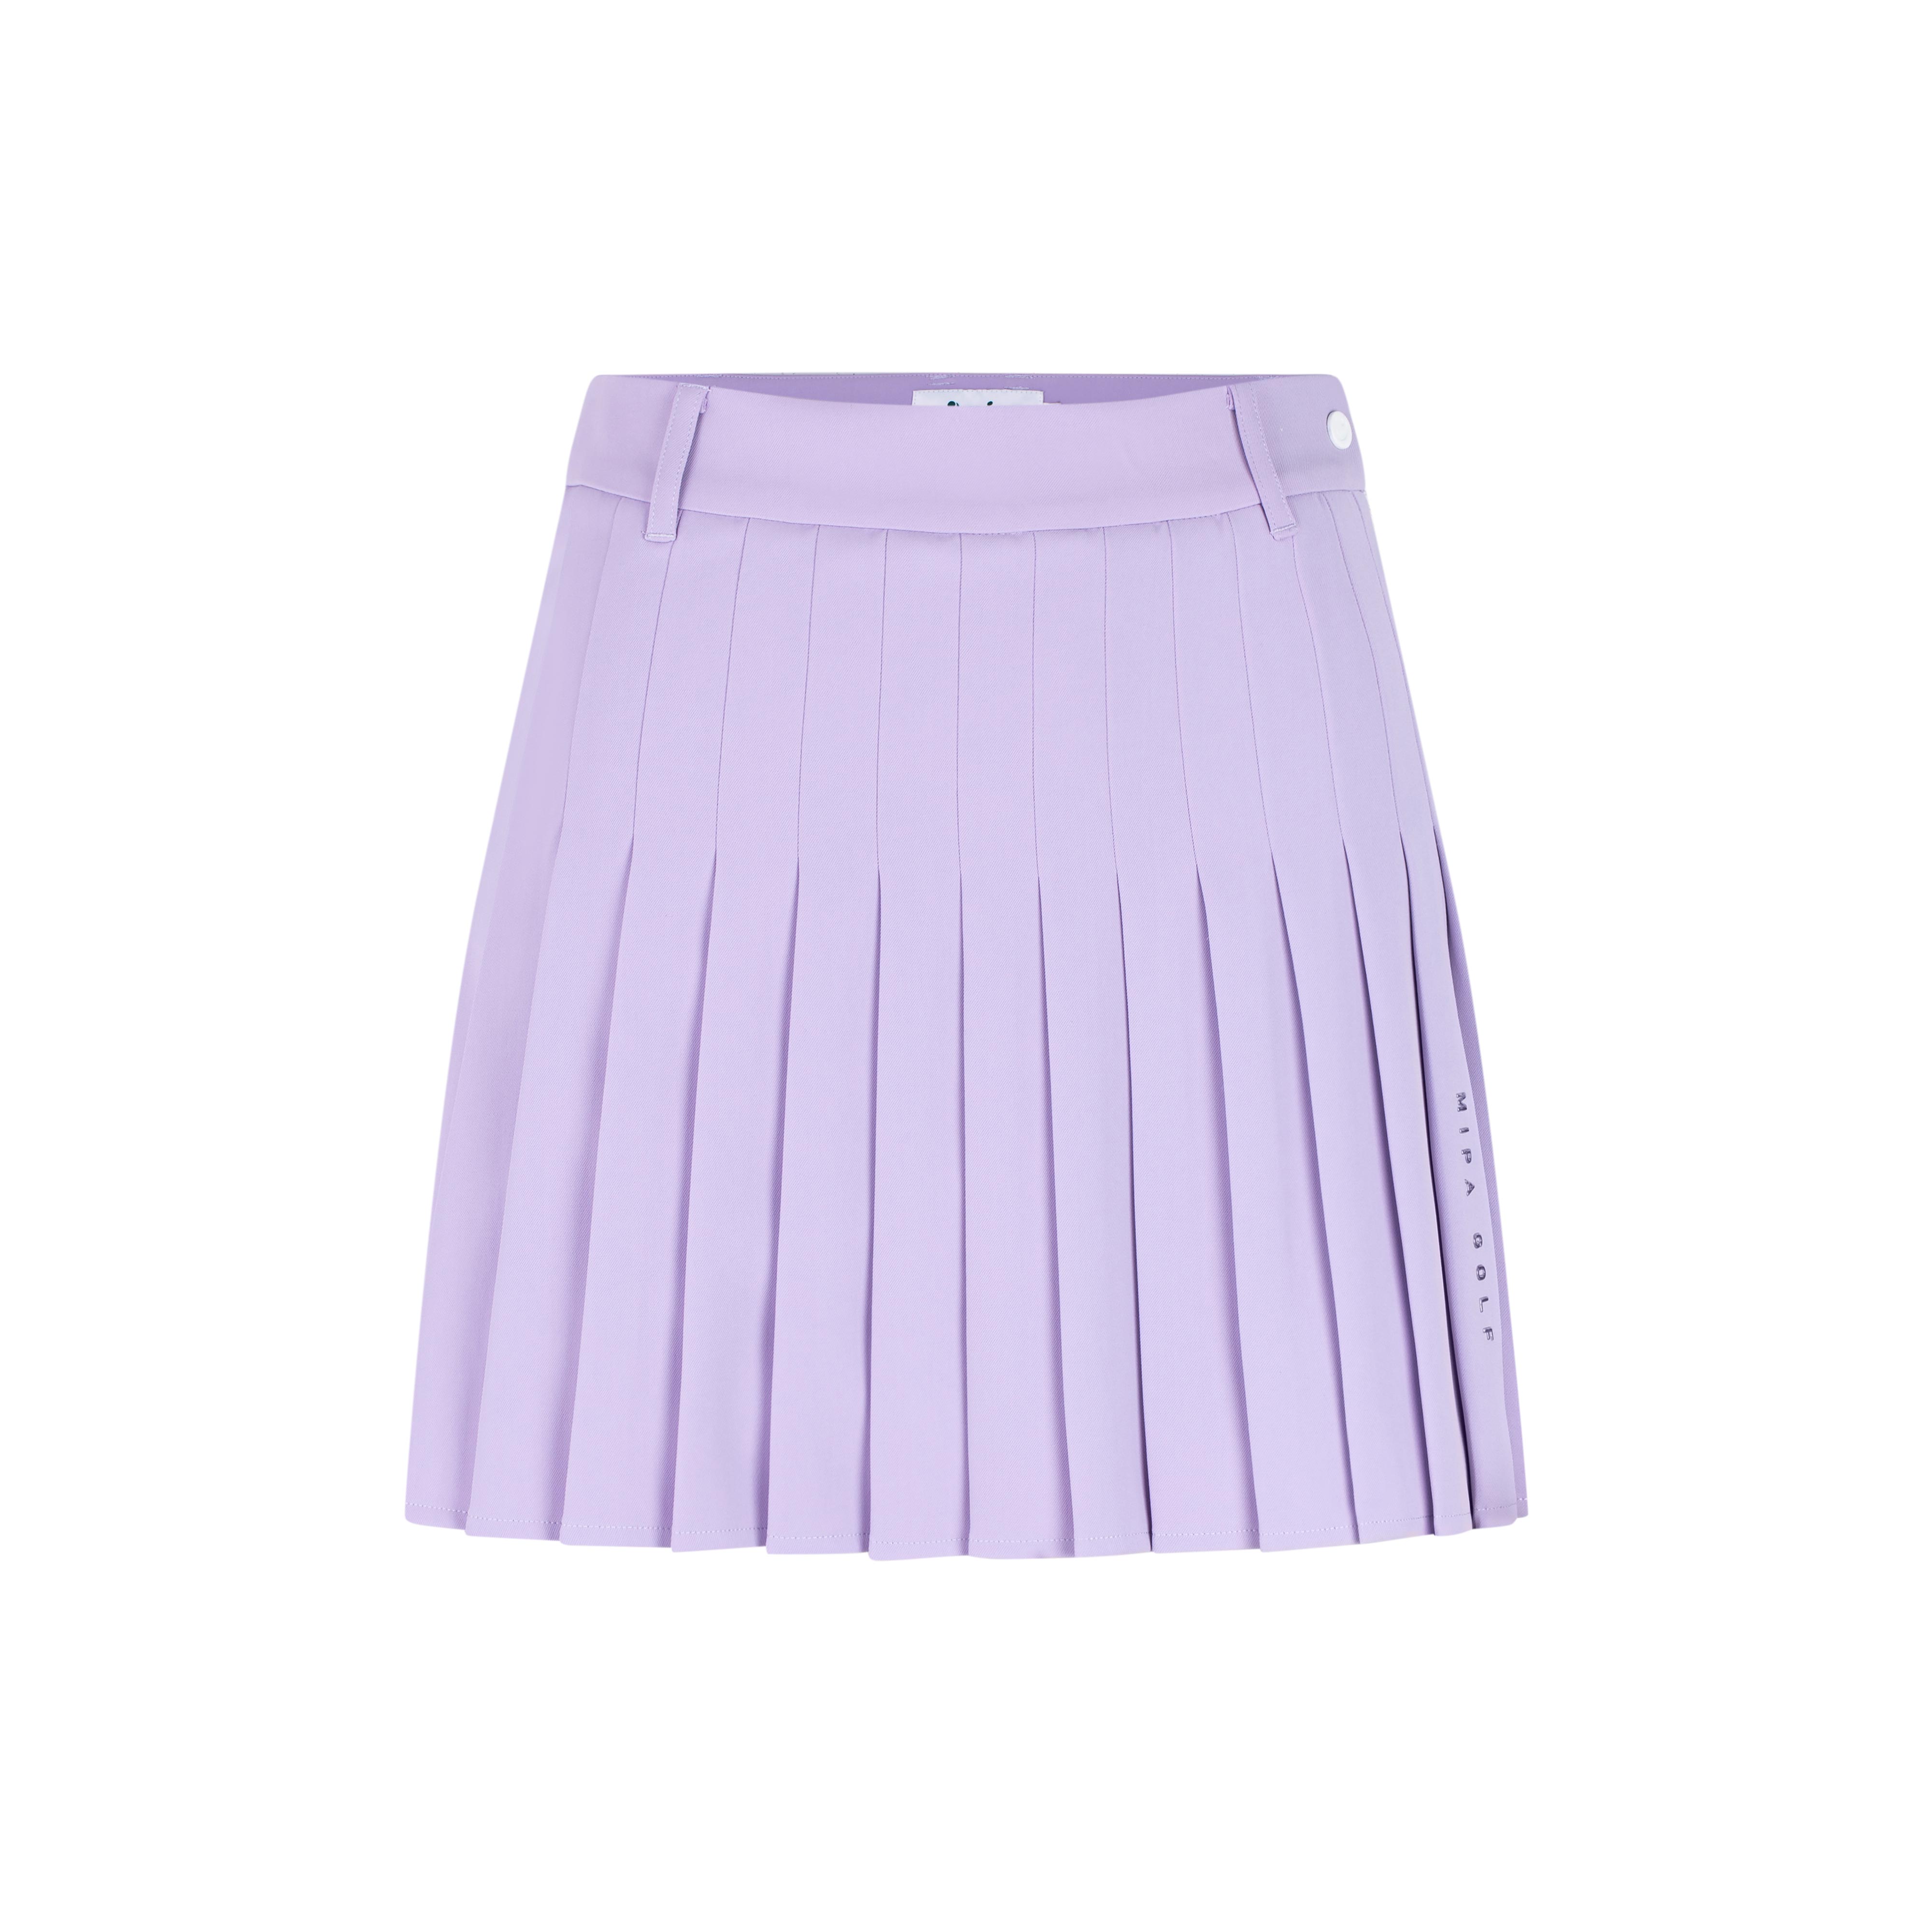 Wendy skirt